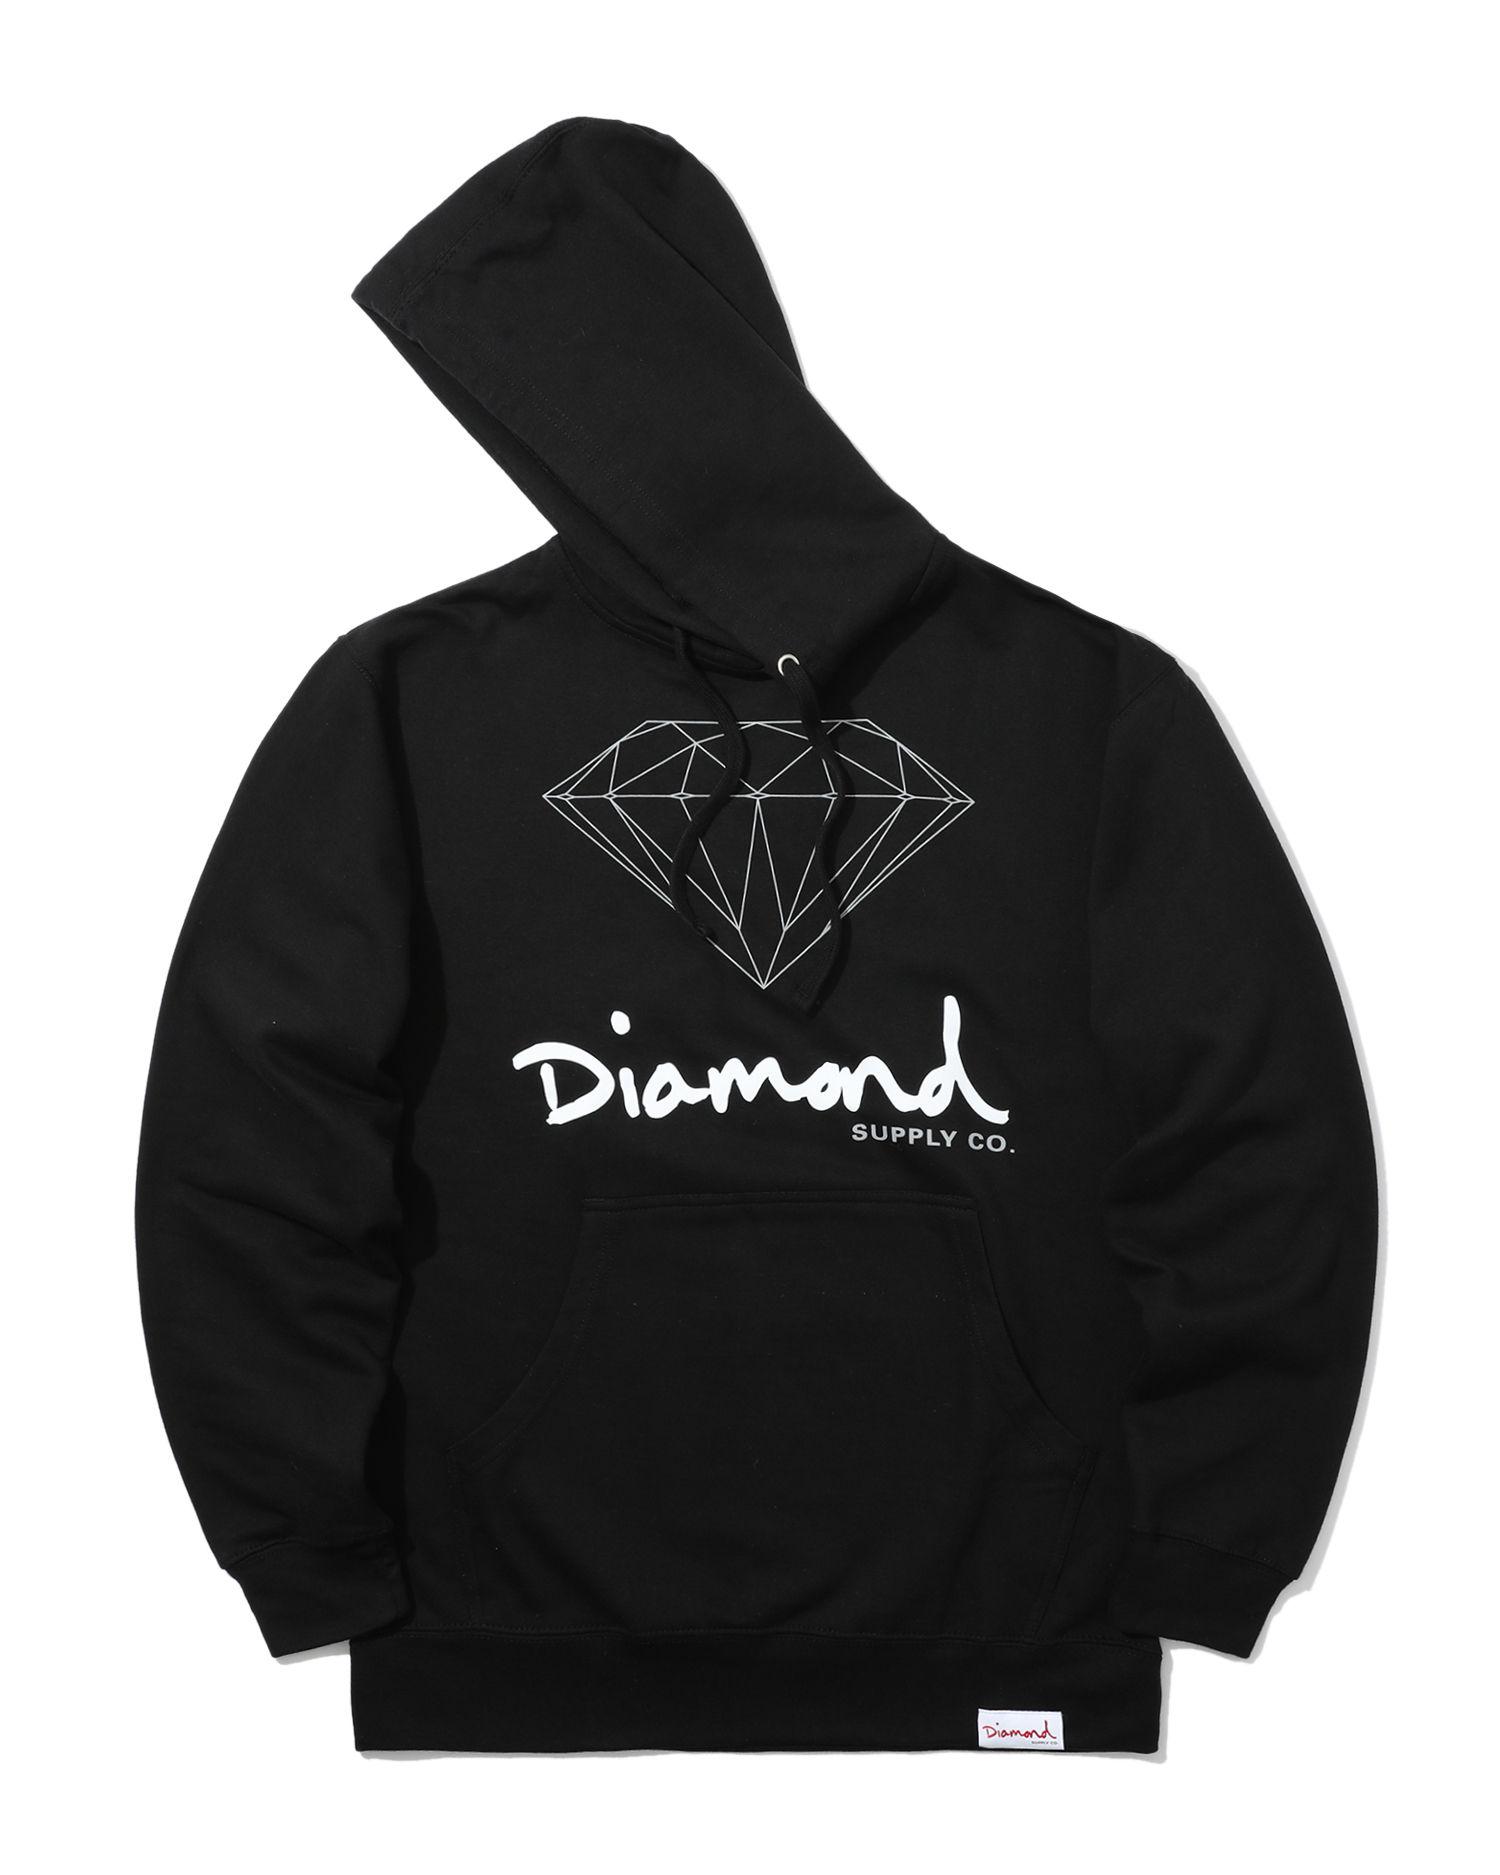 Diamond logo print hoodie by DIAMOND SUPPLY CO.